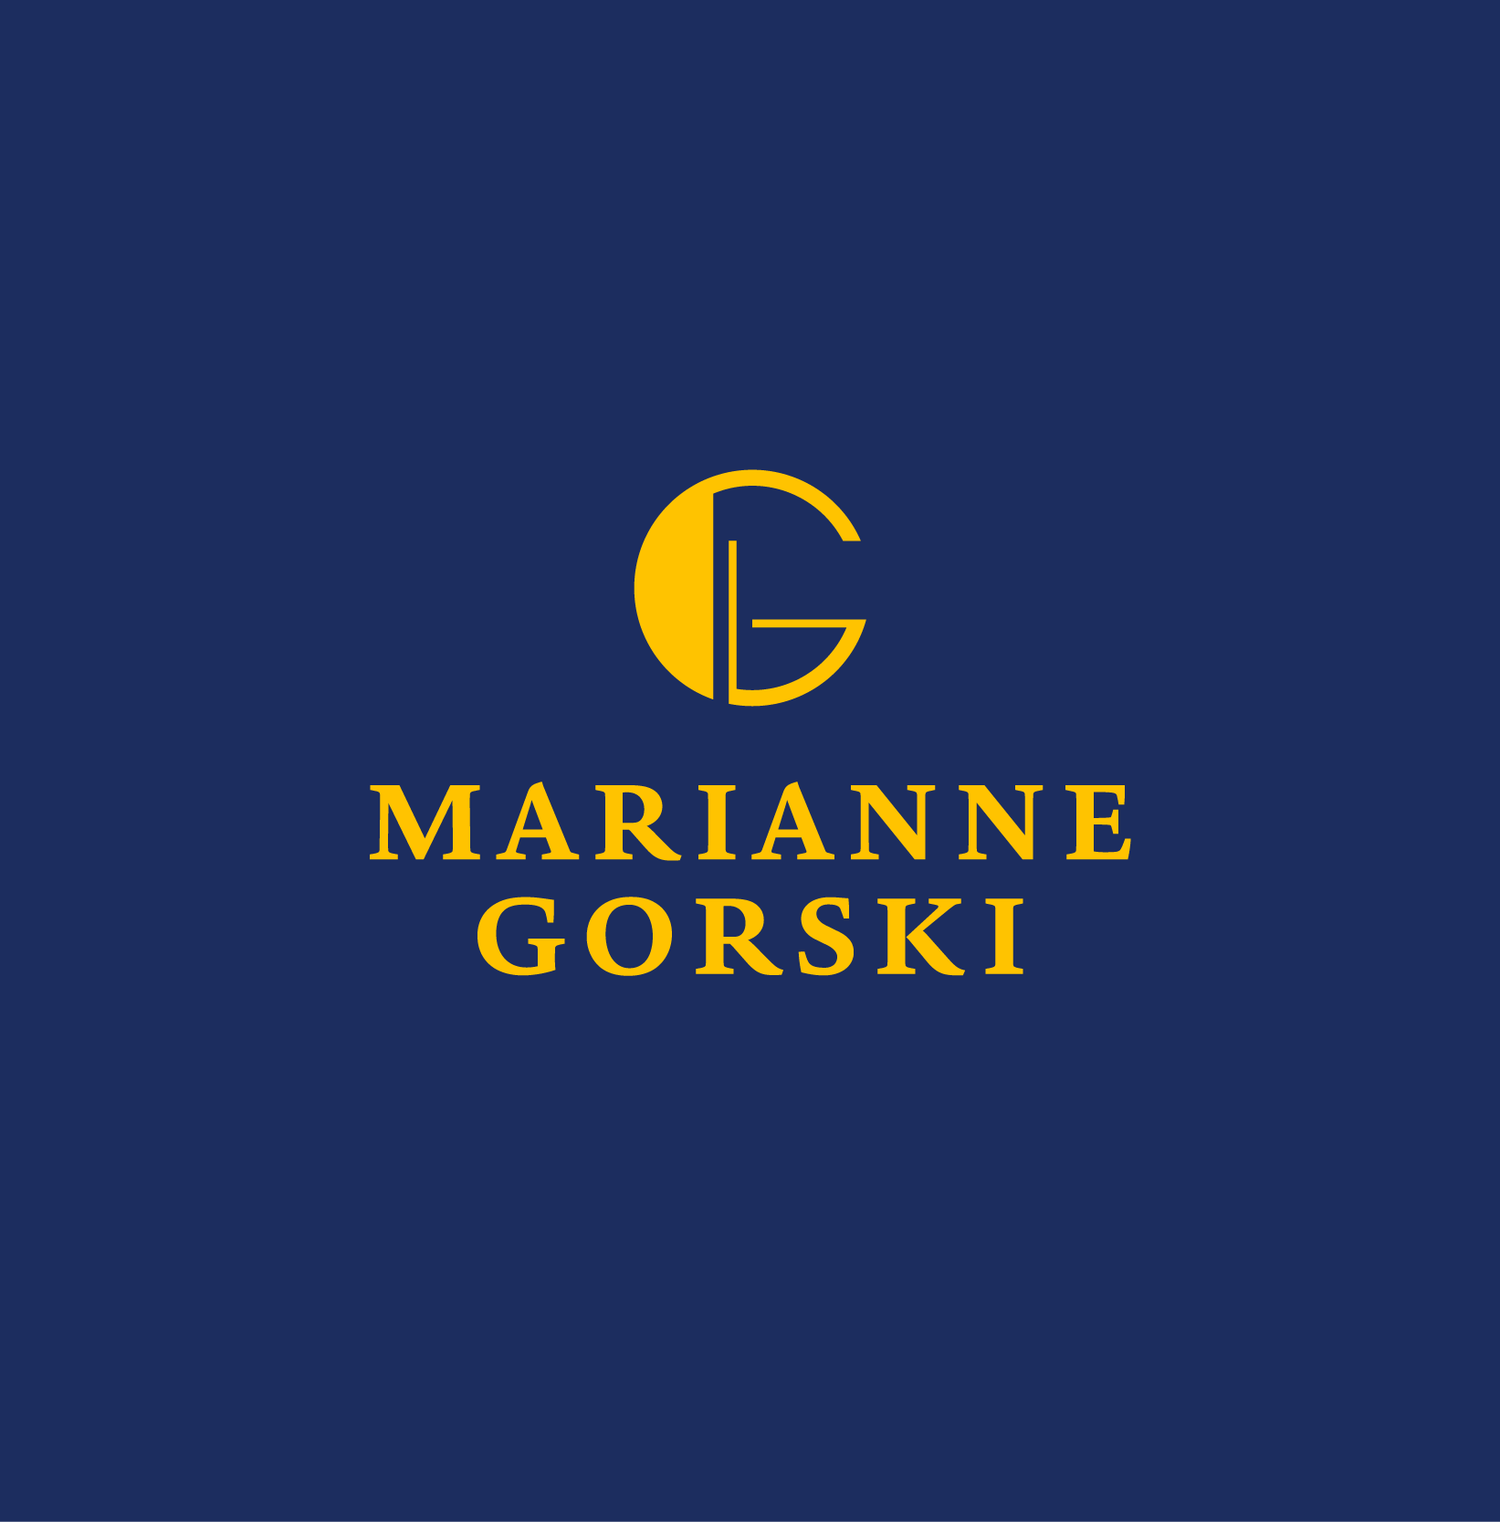 (c) Marianne-gorski.de